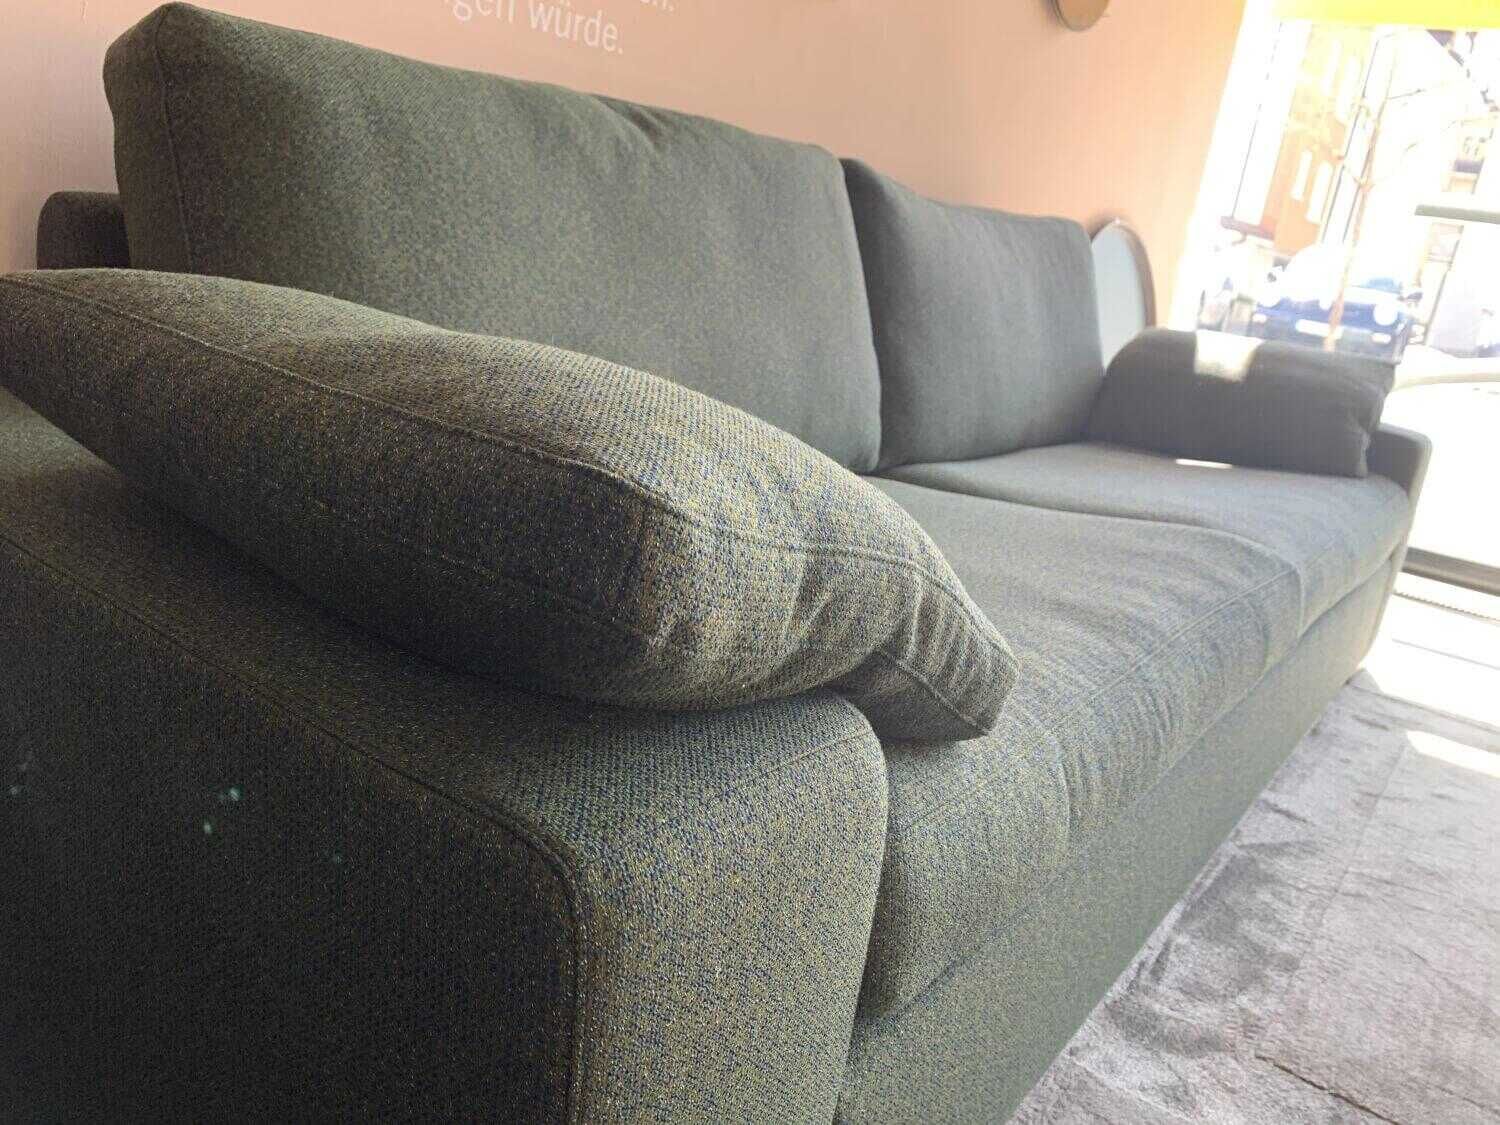 Sofa Conseta Bodennah Stoff 11024 Grün mit 2 Kissen